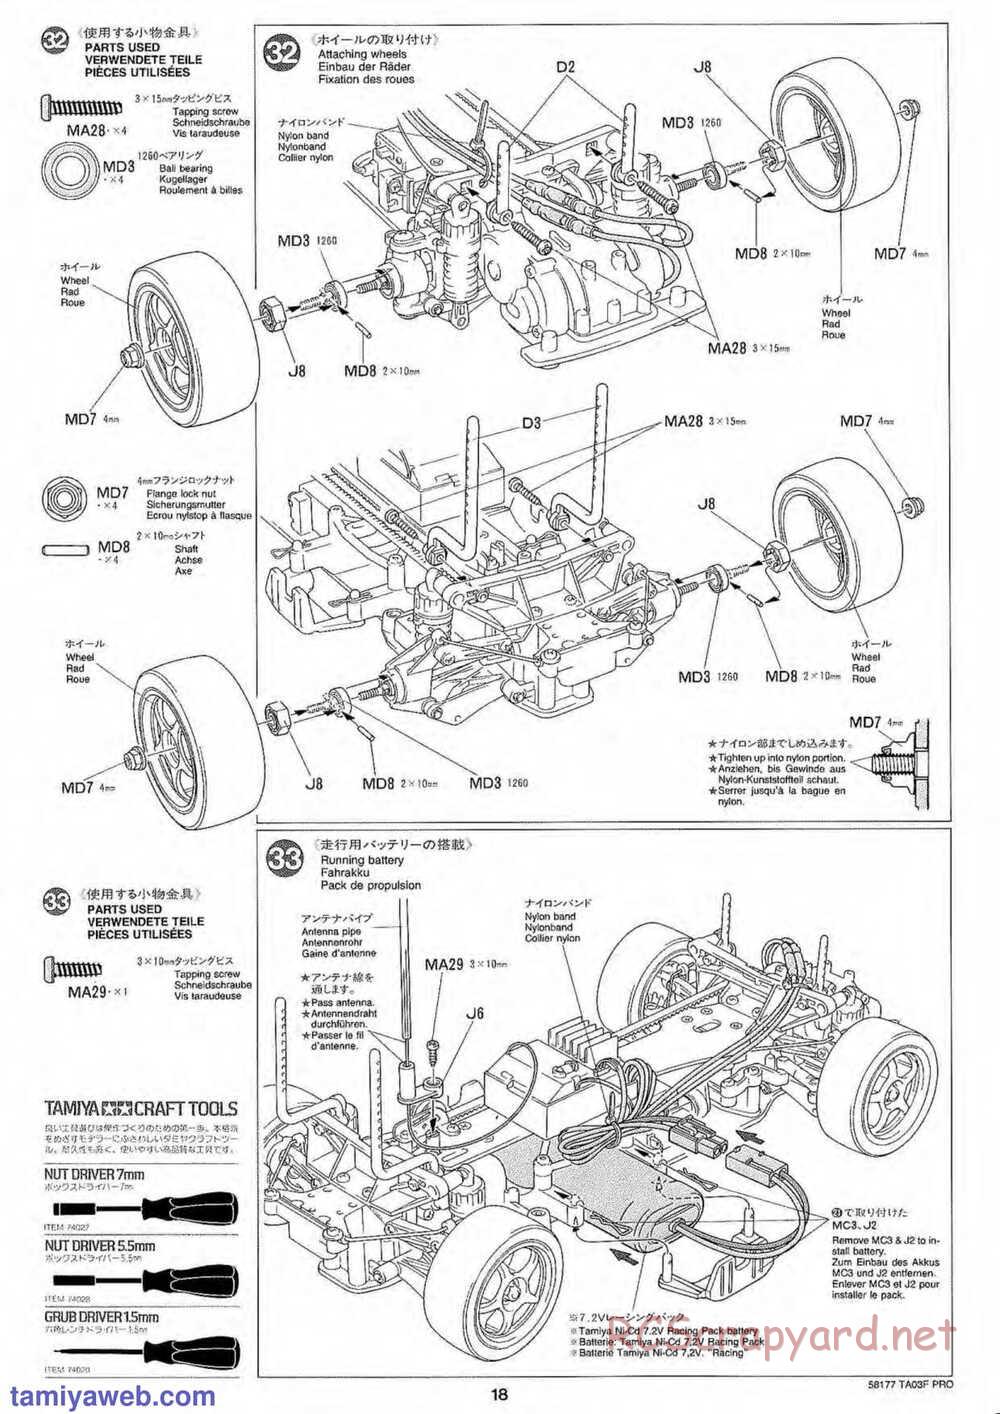 Tamiya - TA-03F Pro Chassis - Manual - Page 18